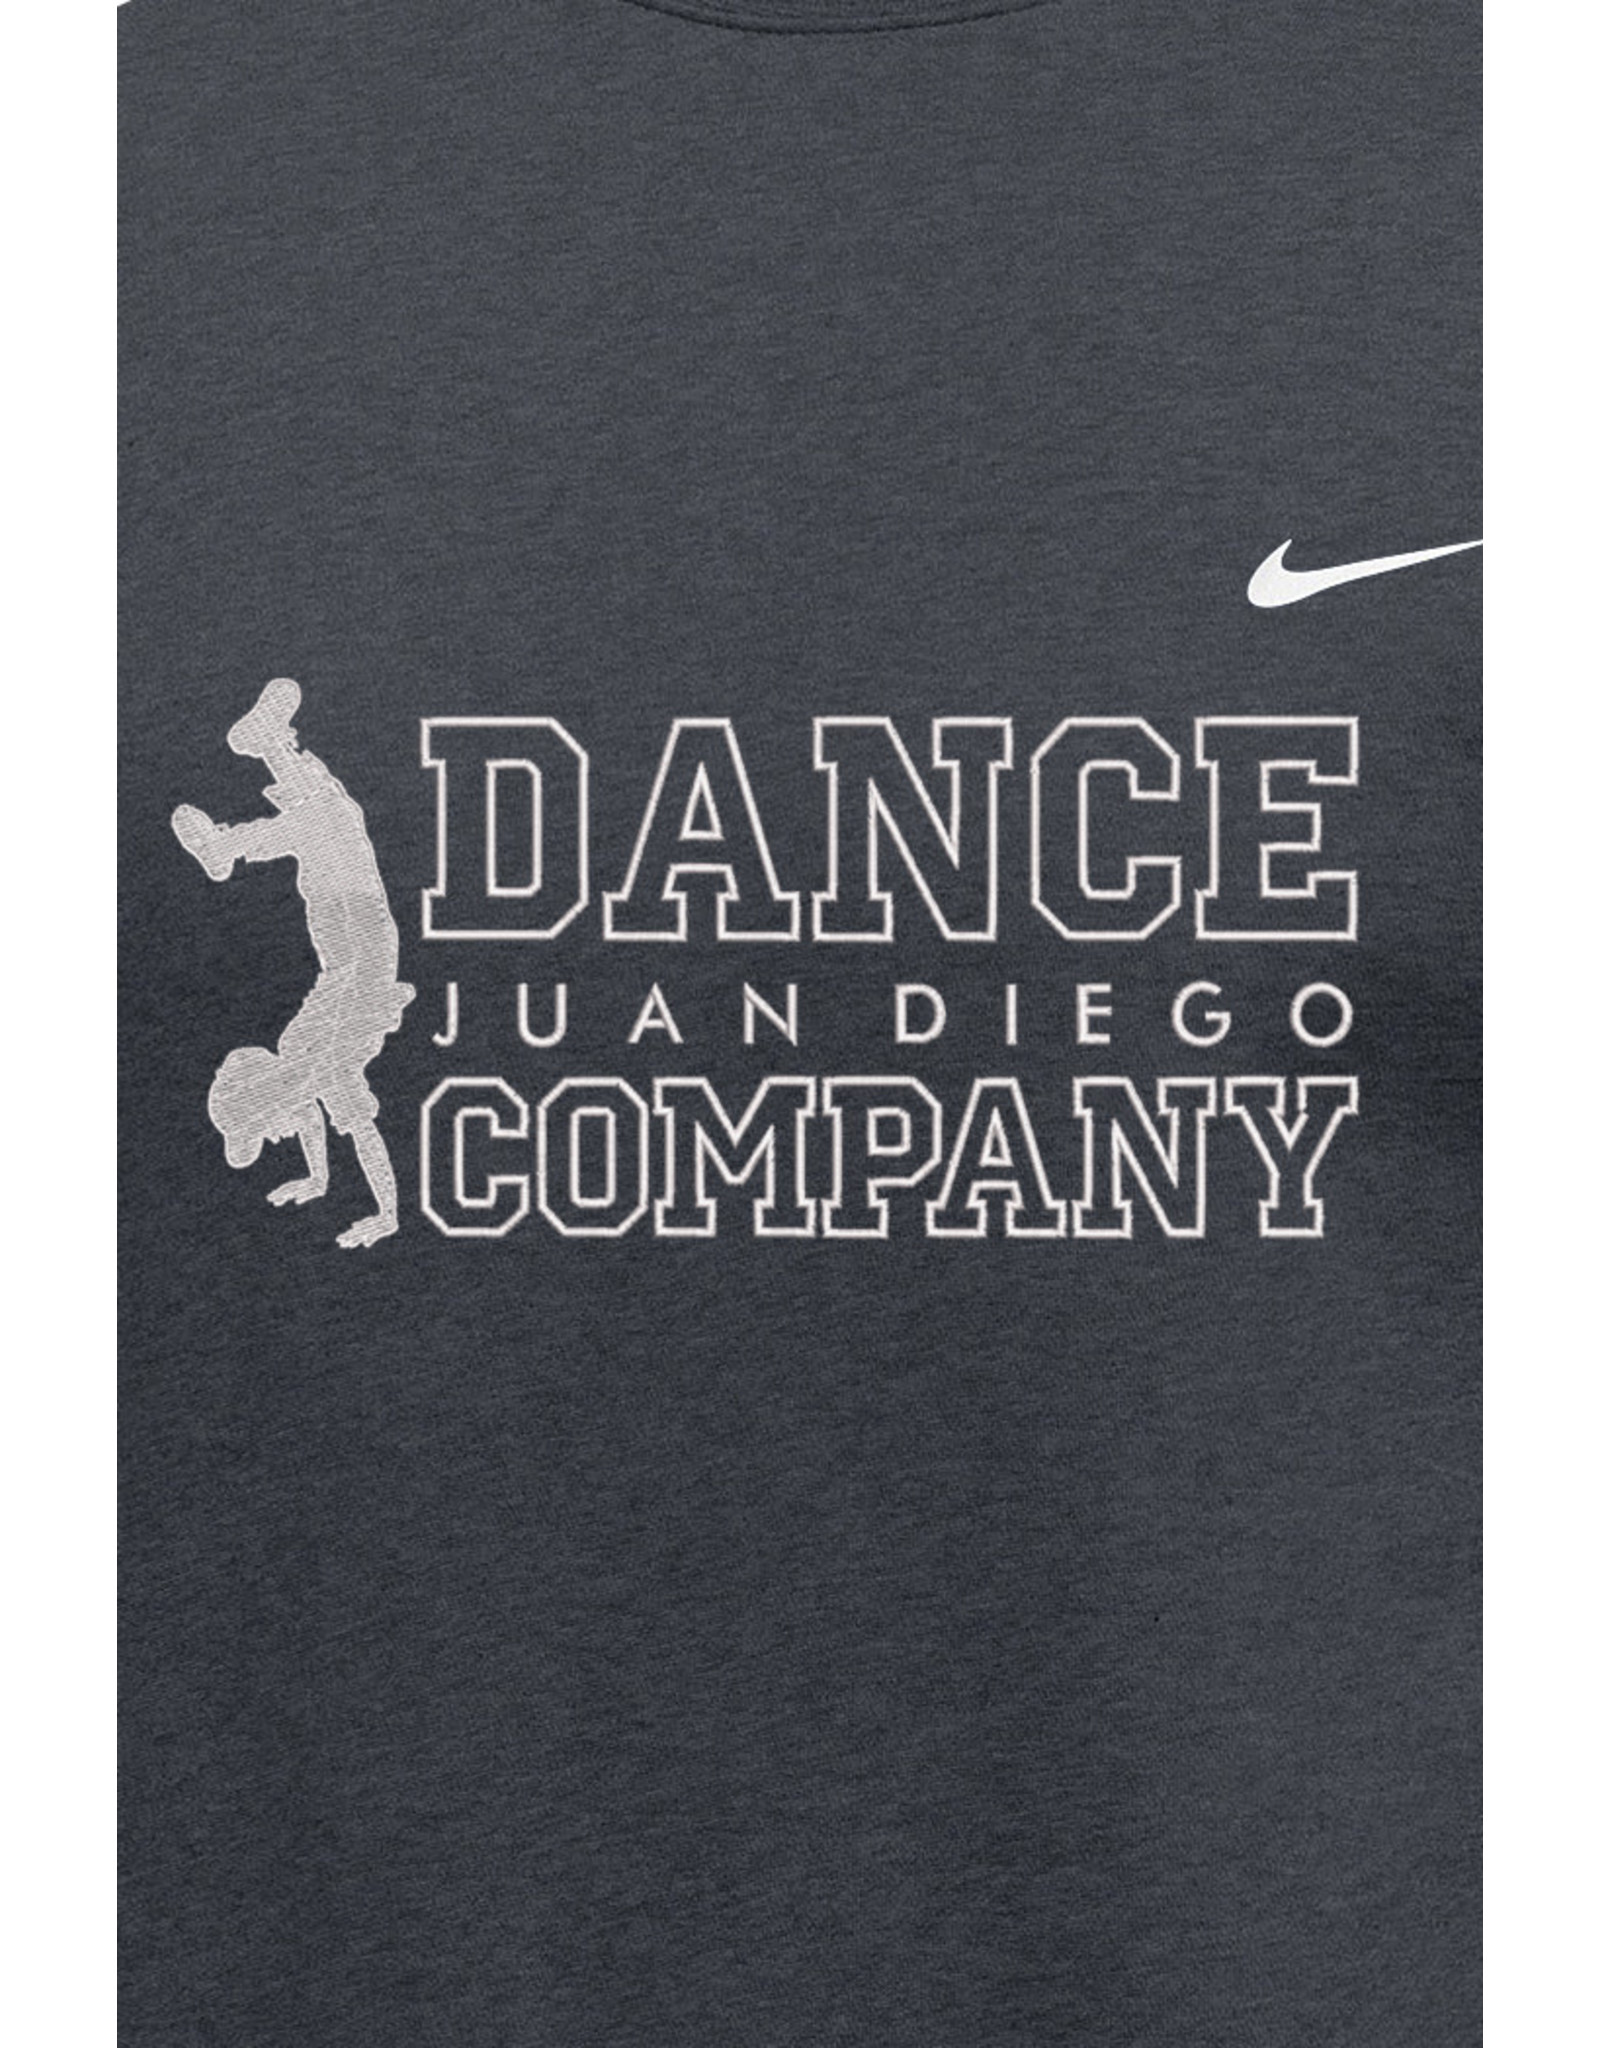 NON-UNIFORM JD Dance Company Embroidered Nike Sweatshirt, custom options